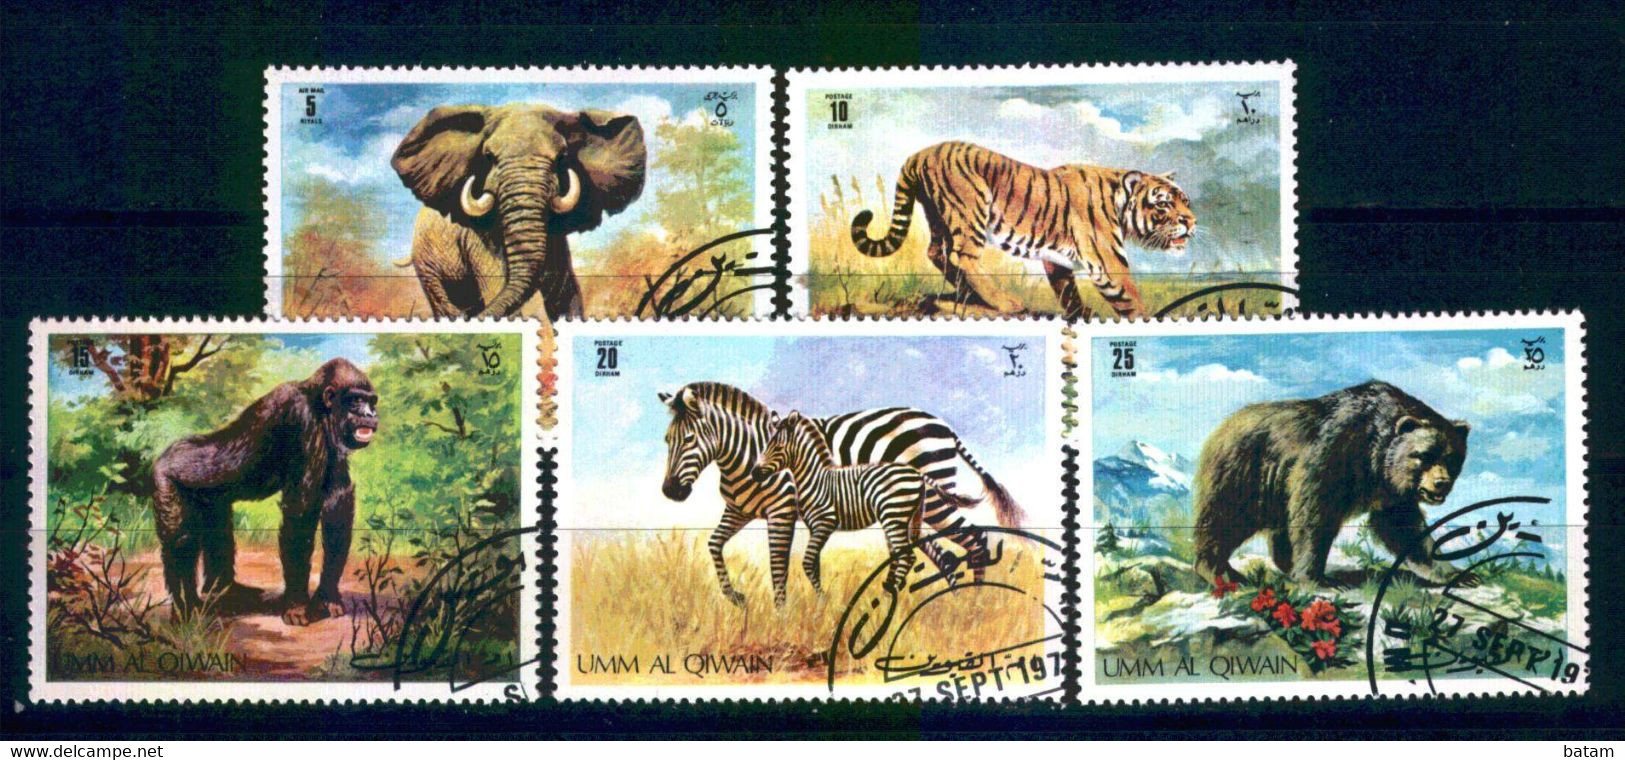 213 - Umm Al Qiwain - Bear - Elephants - Monkeys - Used Set - Elefantes